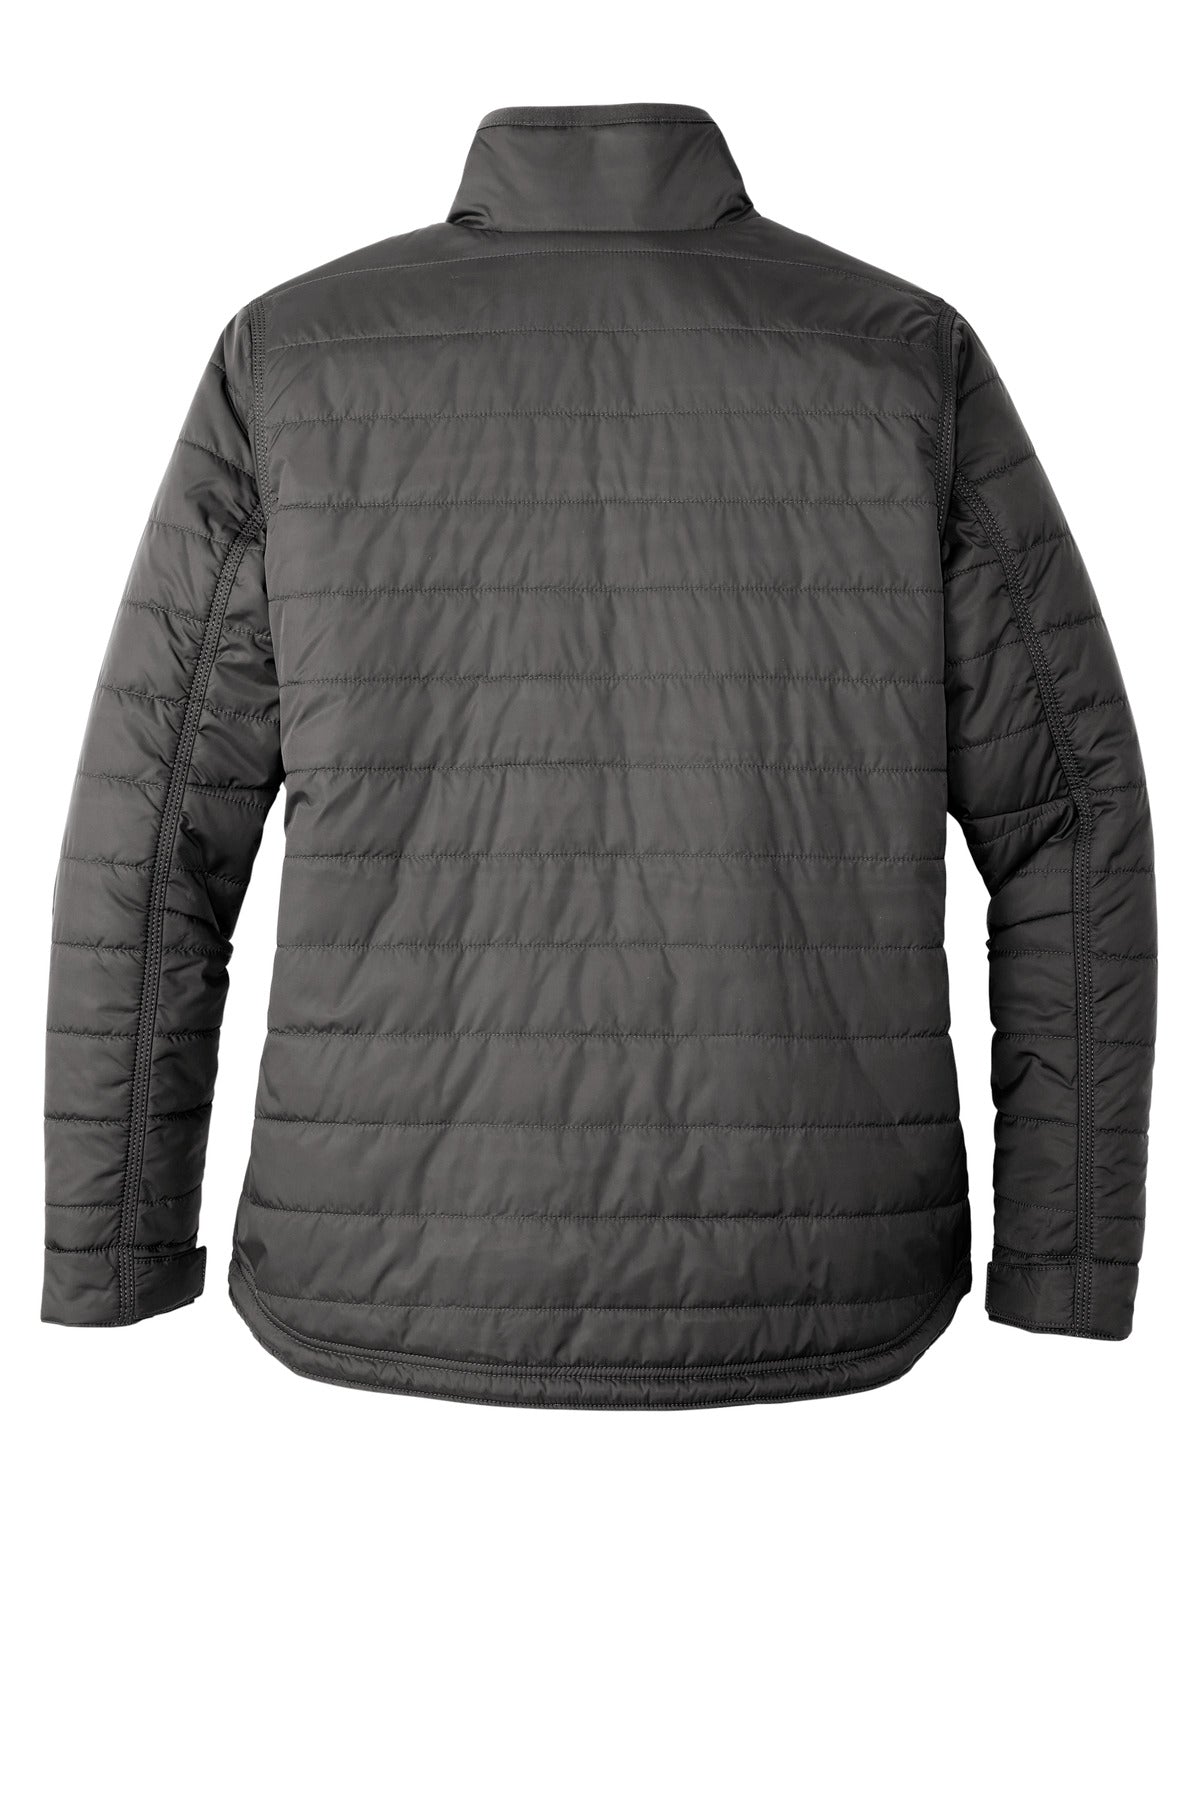 Carhartt Women's Gilliam Jacket CT104314 - BT Imprintables Shirts